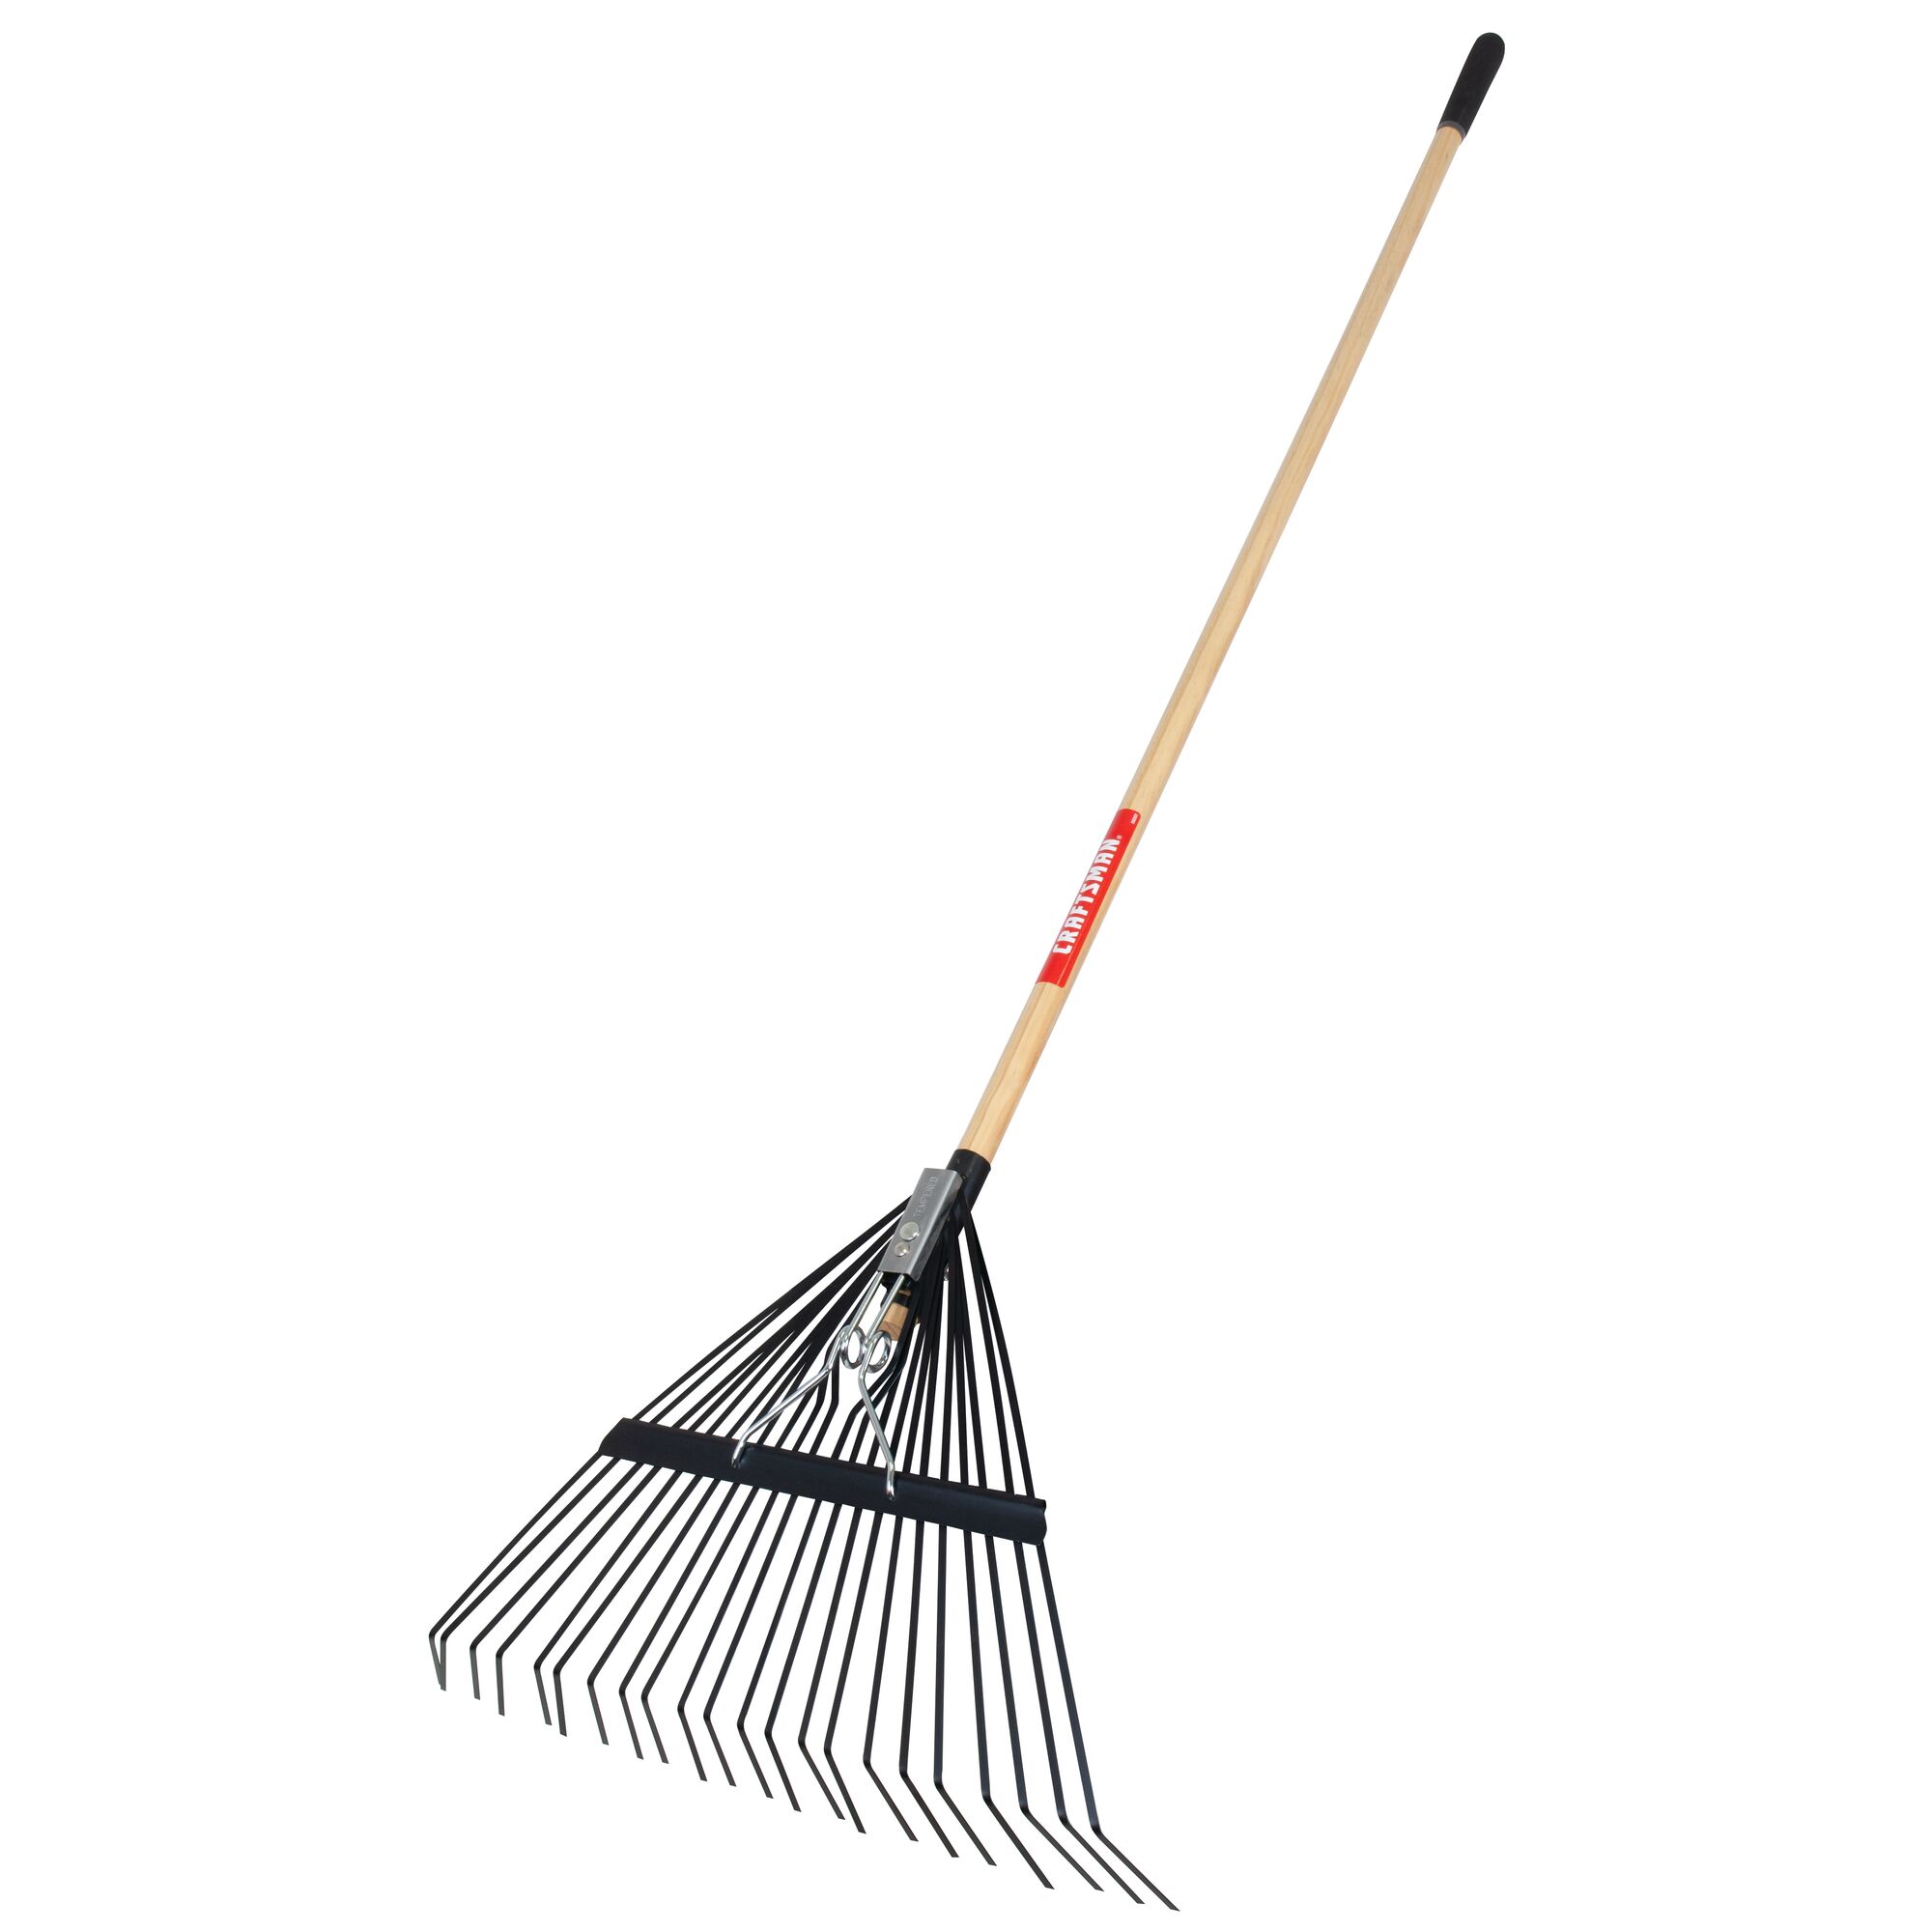 Right profile of 22 inch tine wood handle lawn rake.